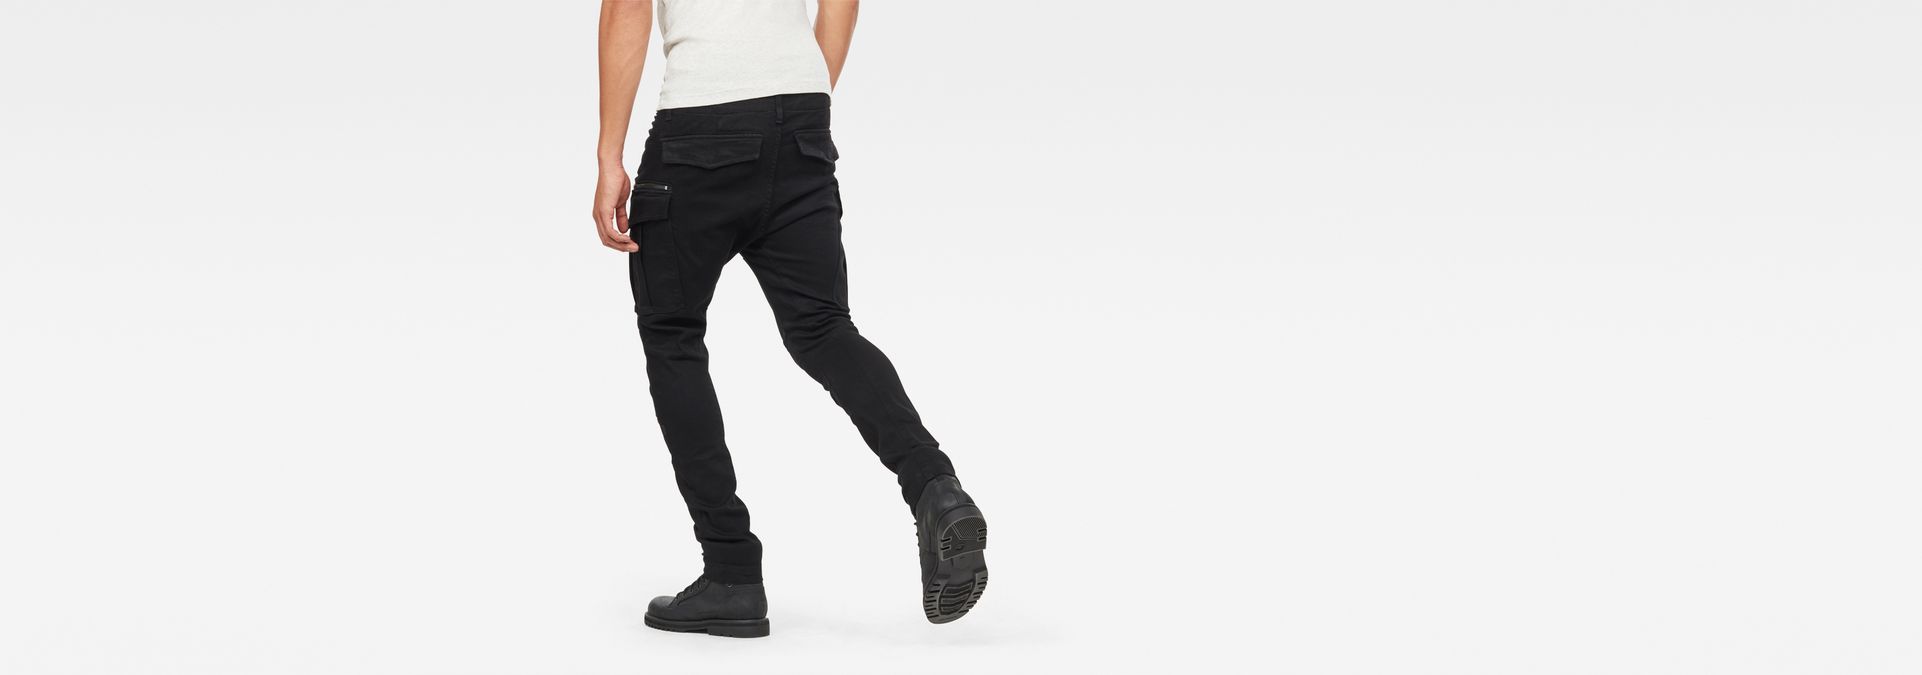 rovic zip 3d skinny jeans